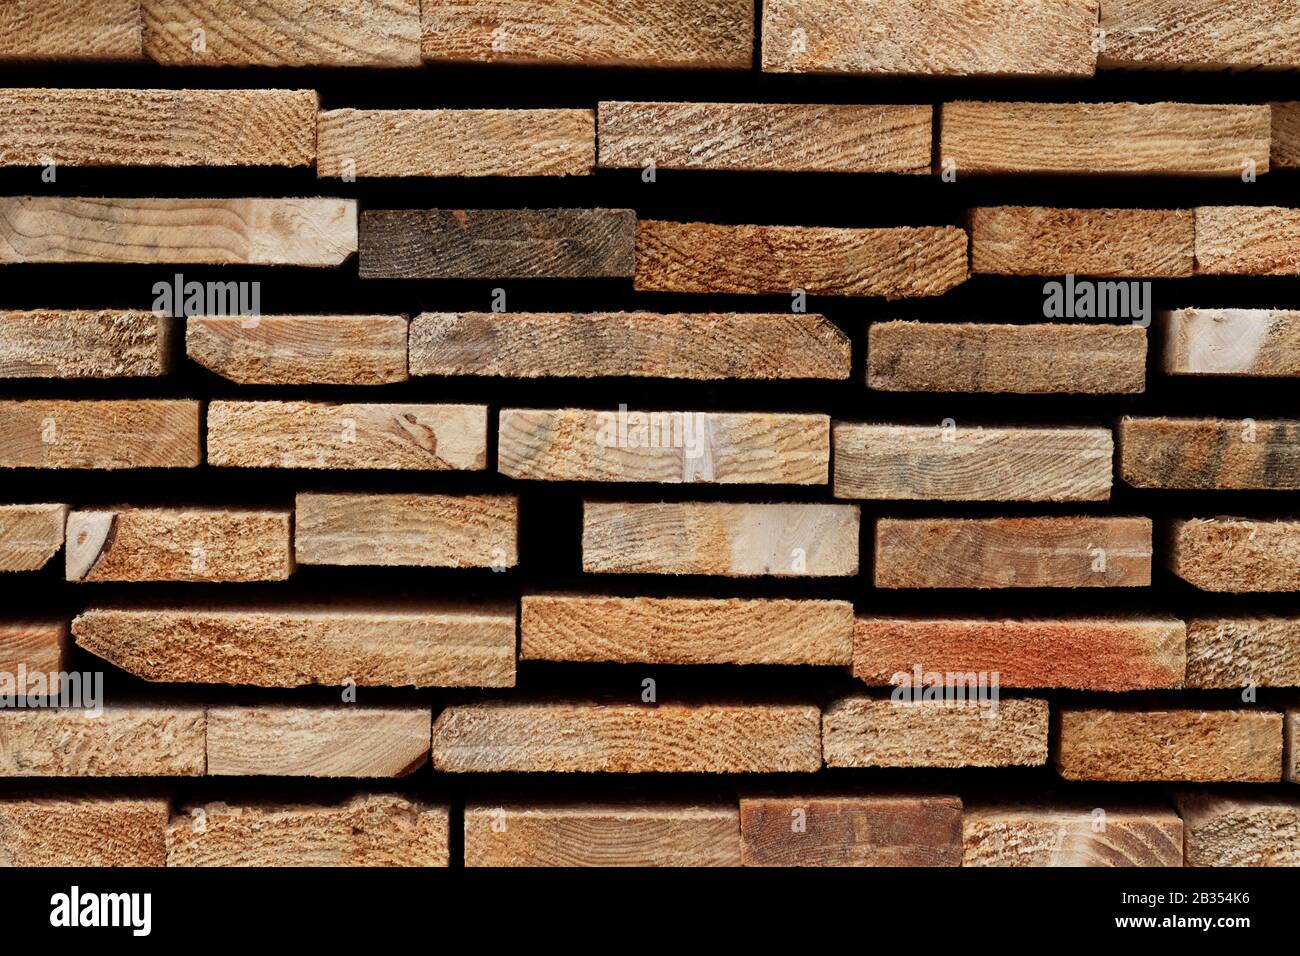 Wood Texture Background: Raw Edges of Stacked Softwood Slats Stock Photo